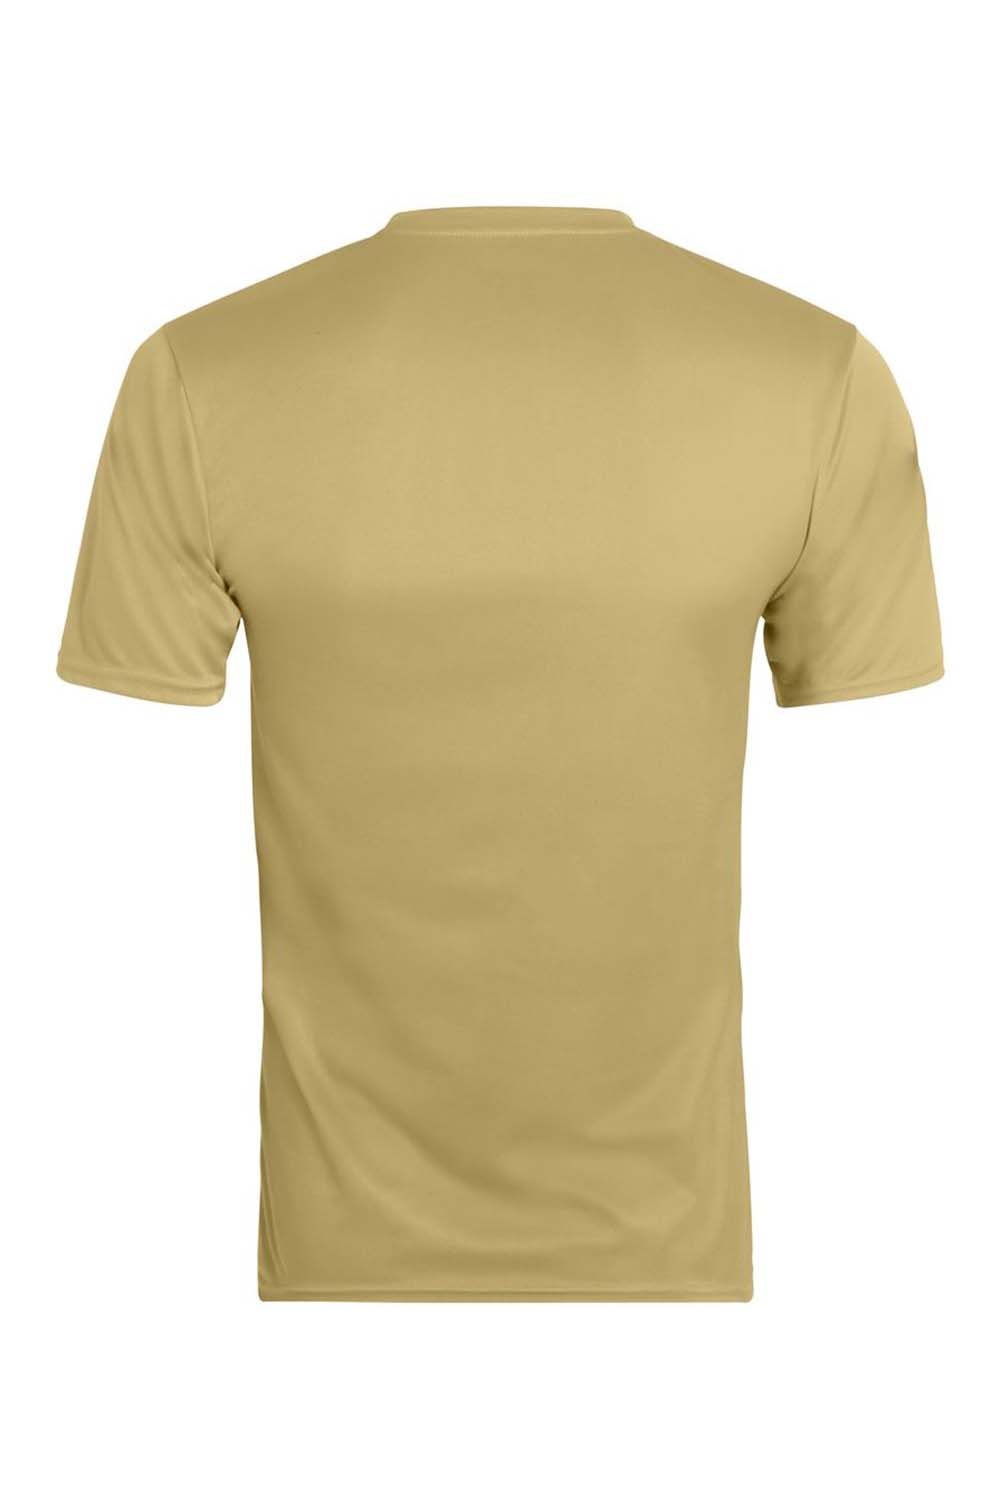 Augusta Sportswear 790 Mens Moisture Wicking Short Sleeve Crewneck T-Shirt Vegas Gold Model Flat Back